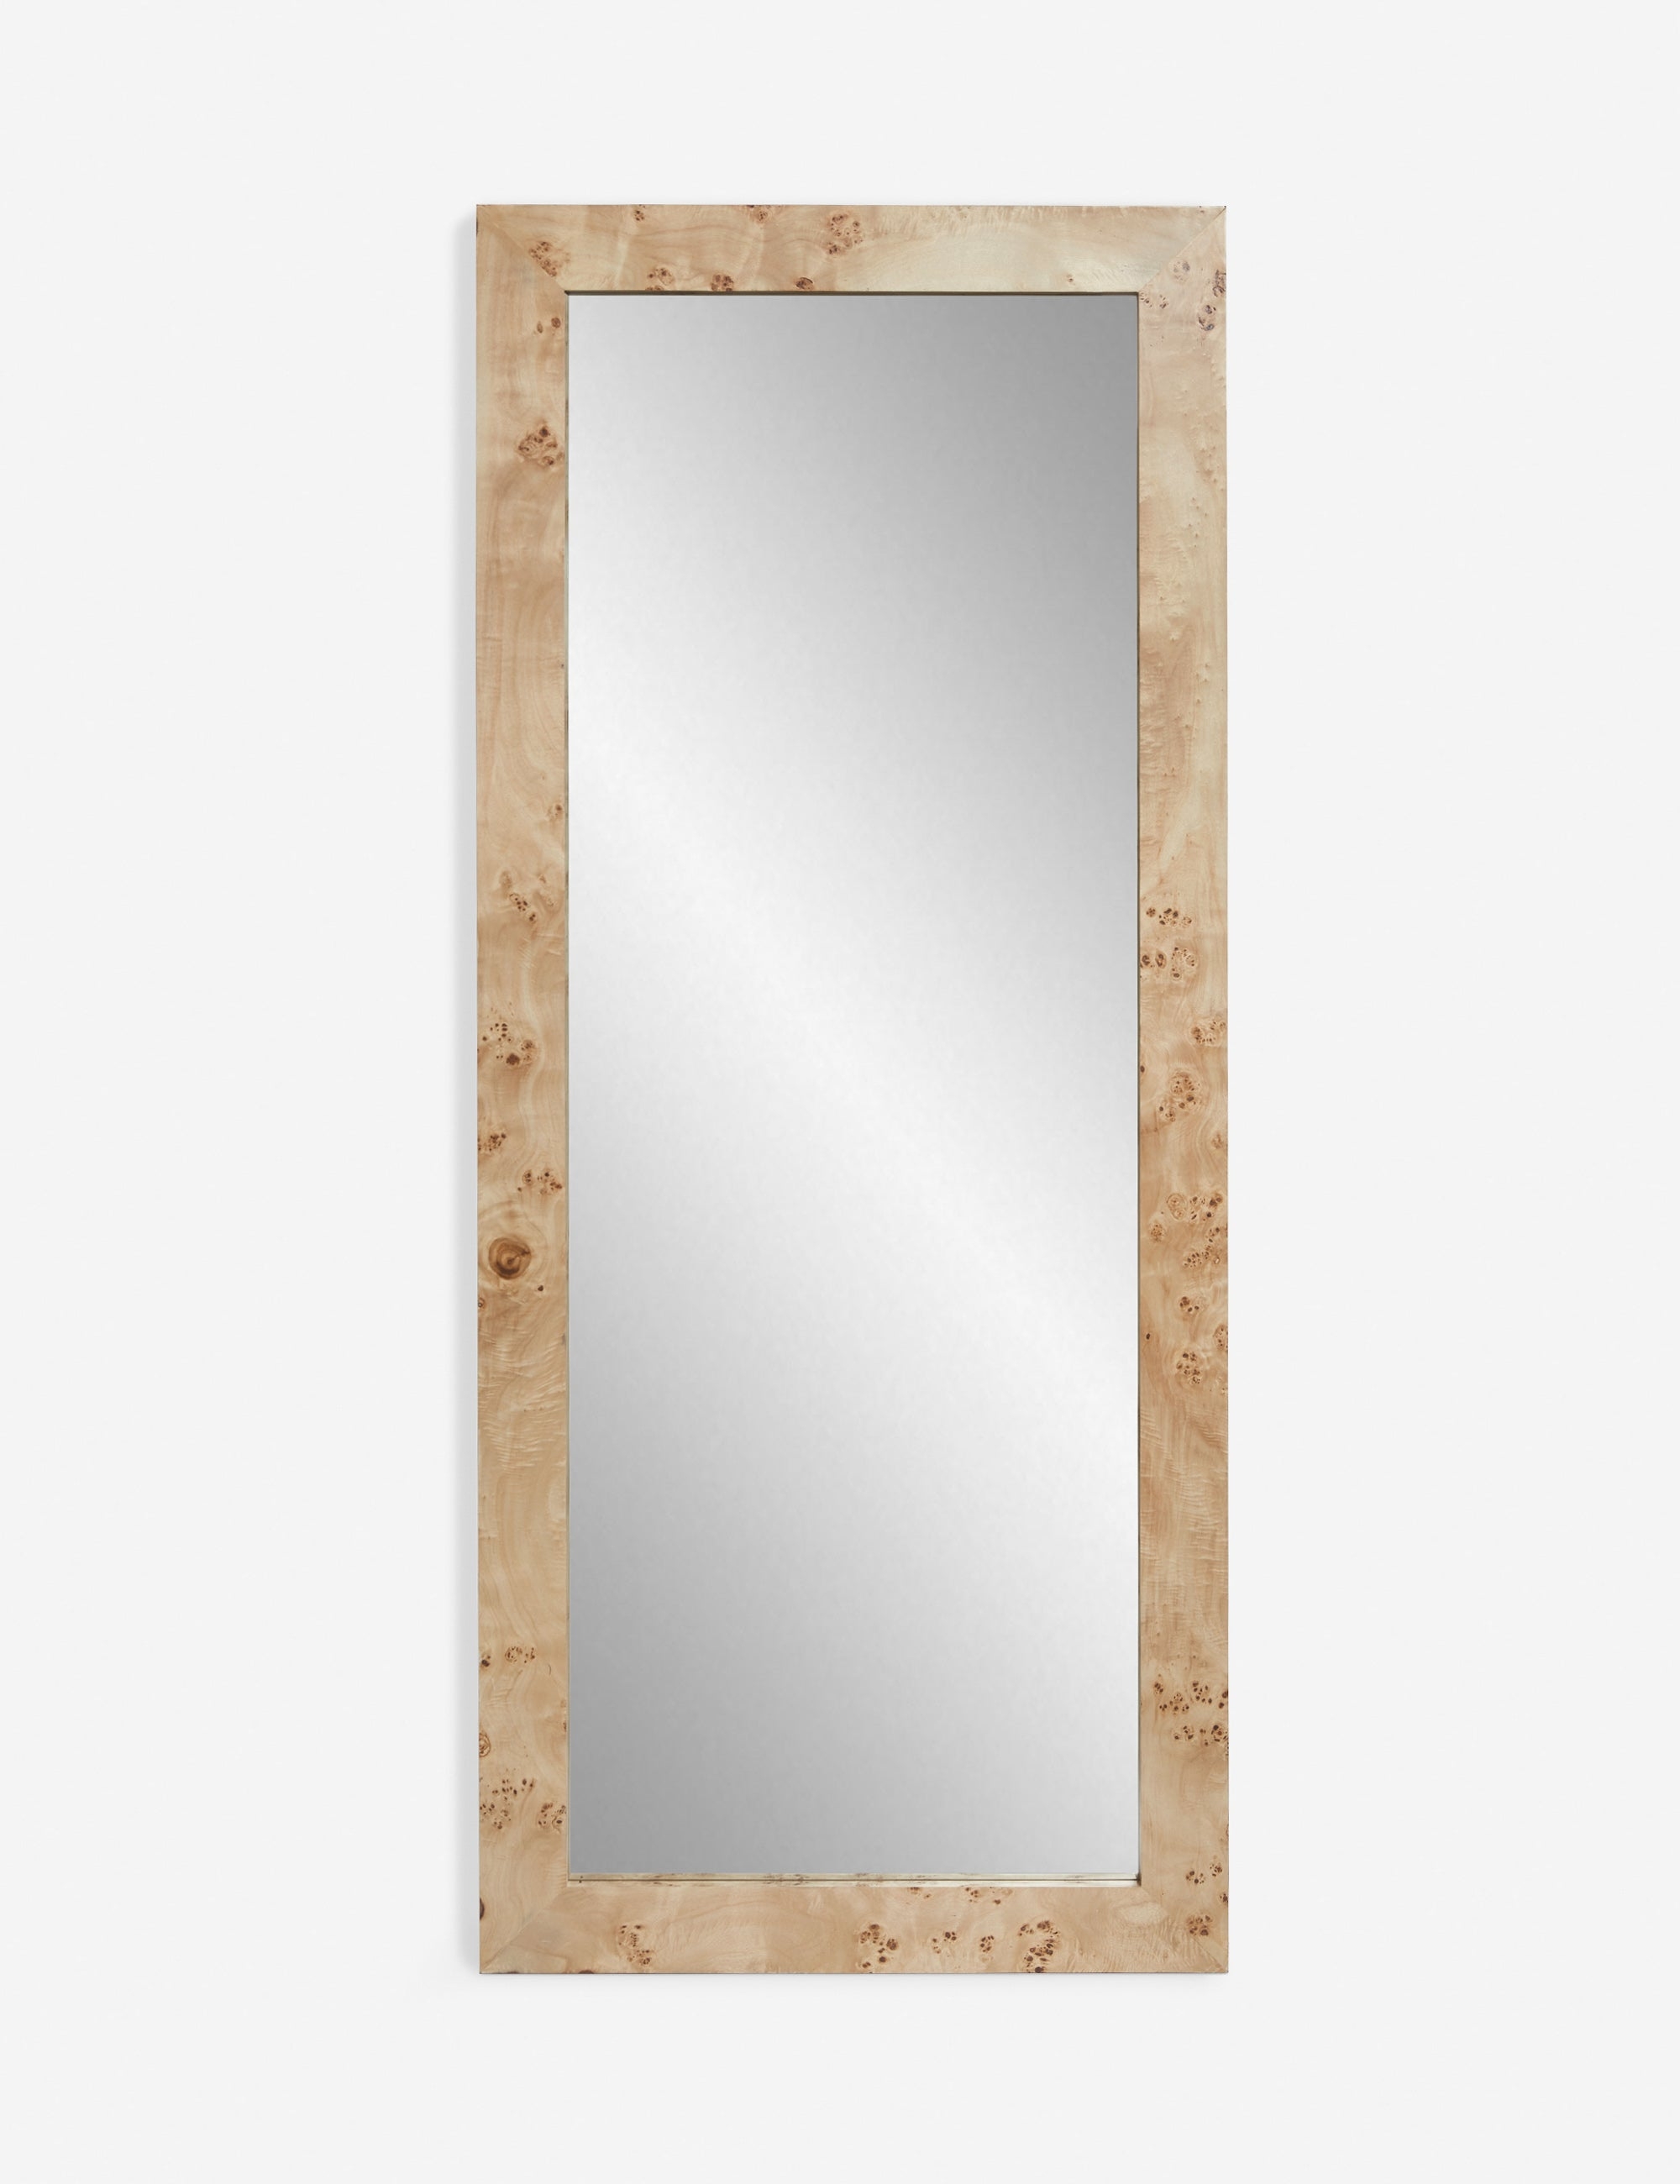 Bree Burl Wood Floor Mirror - Image 0